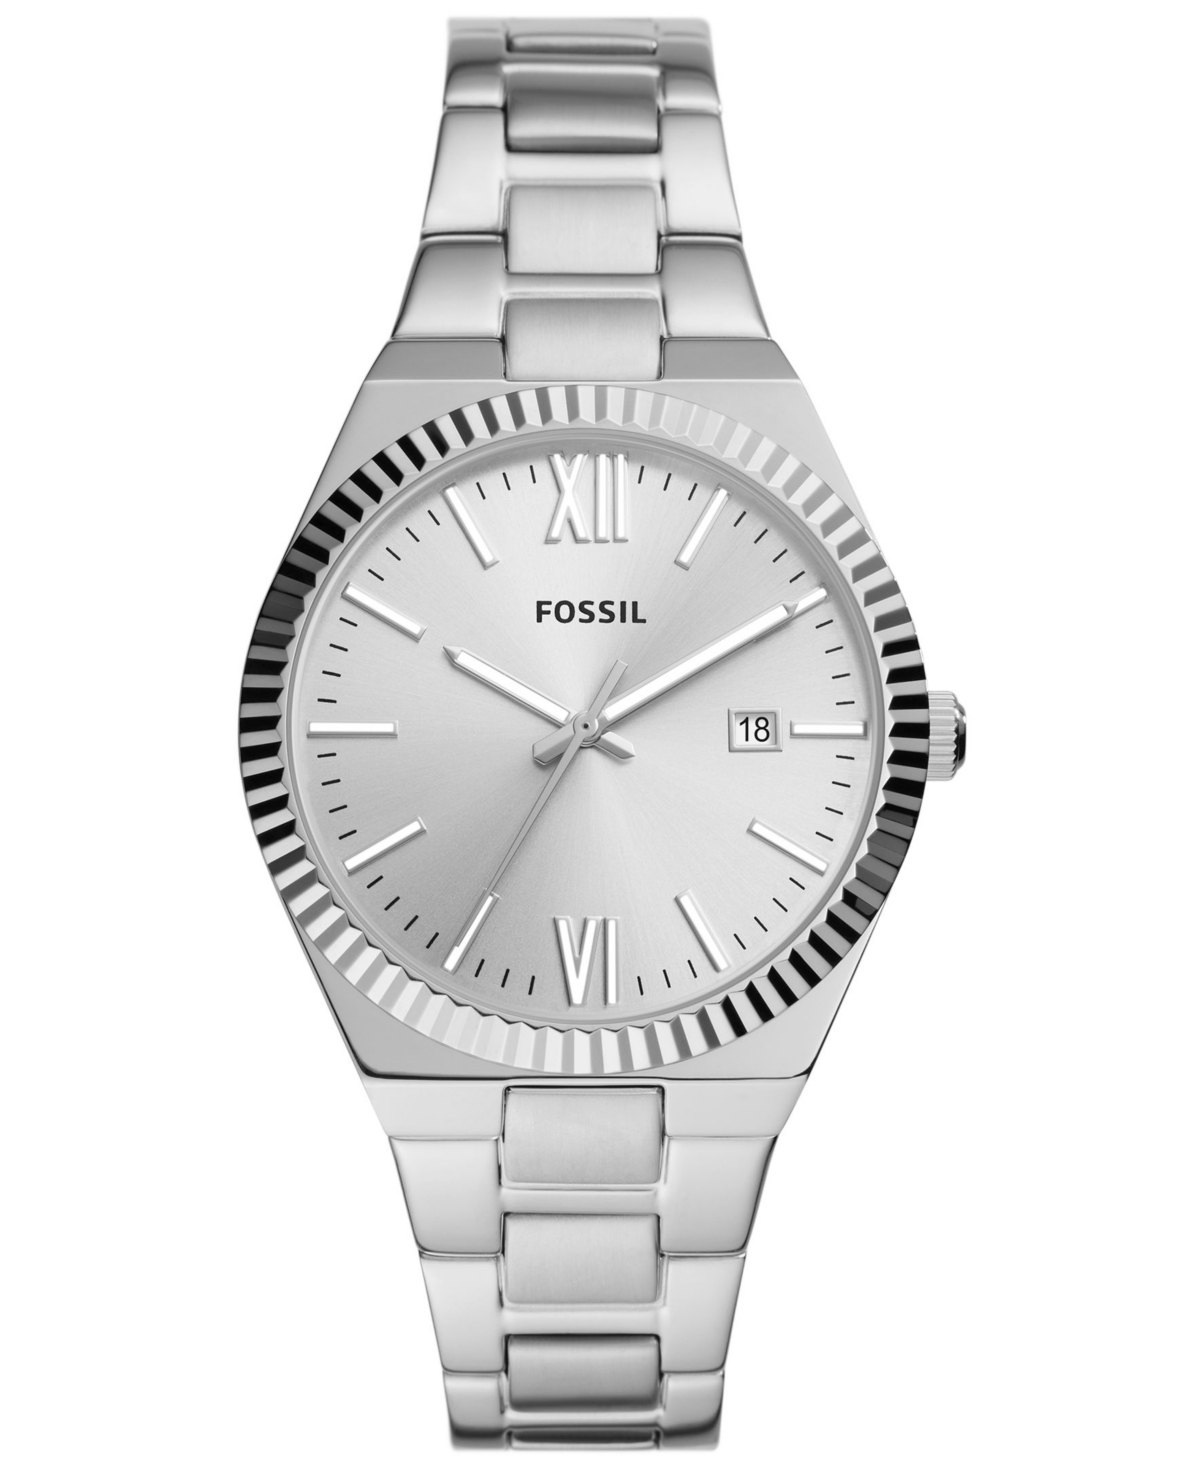 Fossil Women's Scarlette Three-hand Date Silver-tone Stainless Steel Watch, 38mm